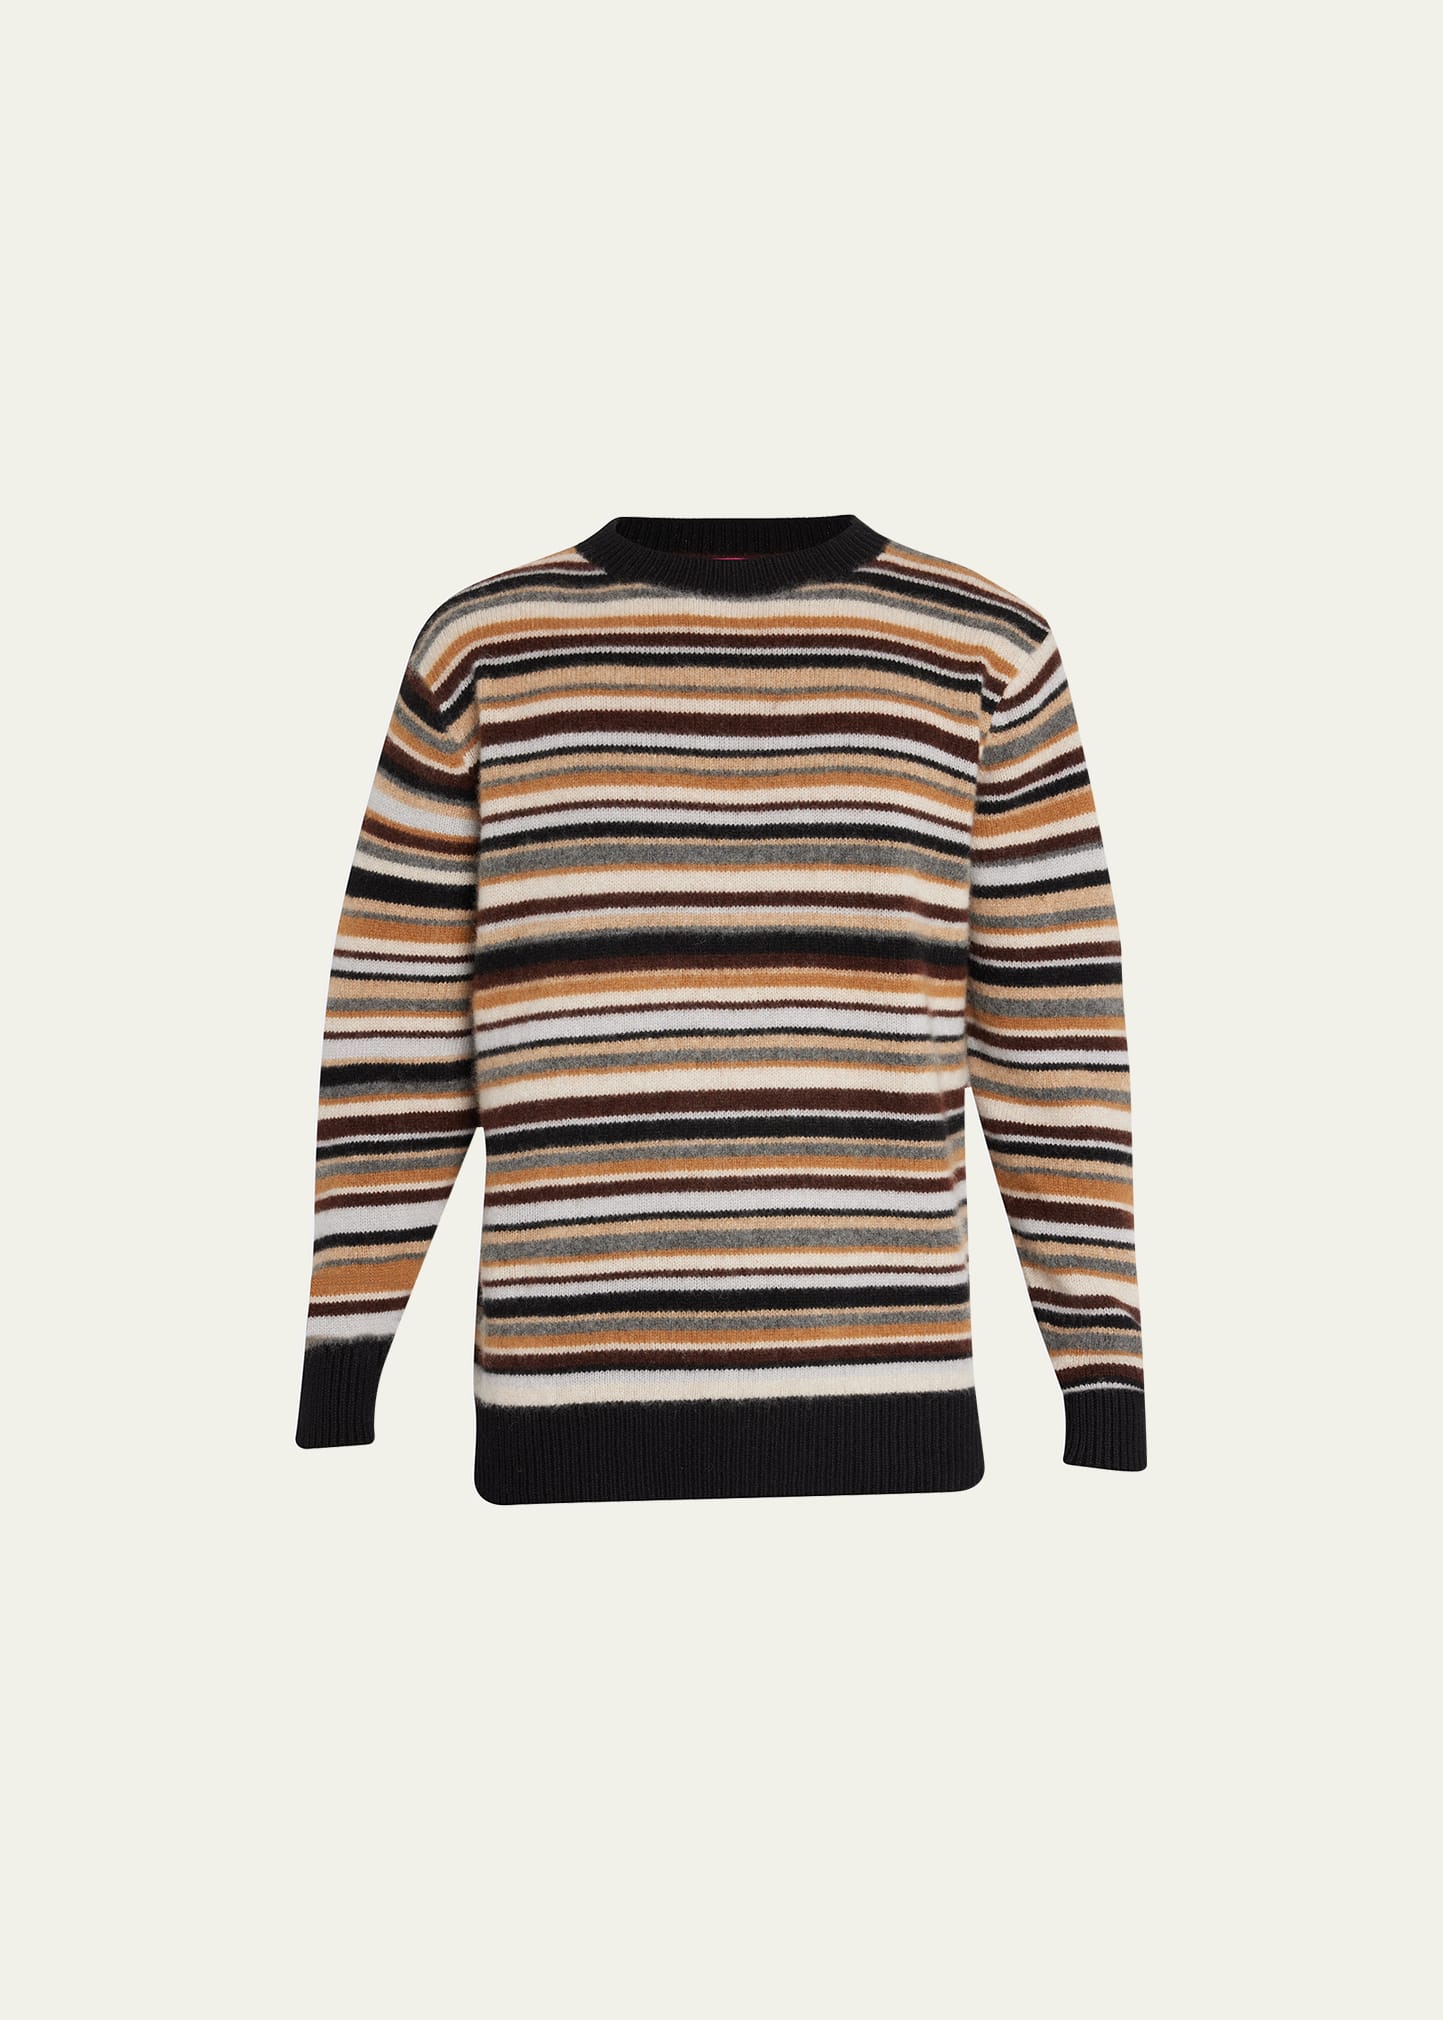 Men's Striped Cashmere Sweater